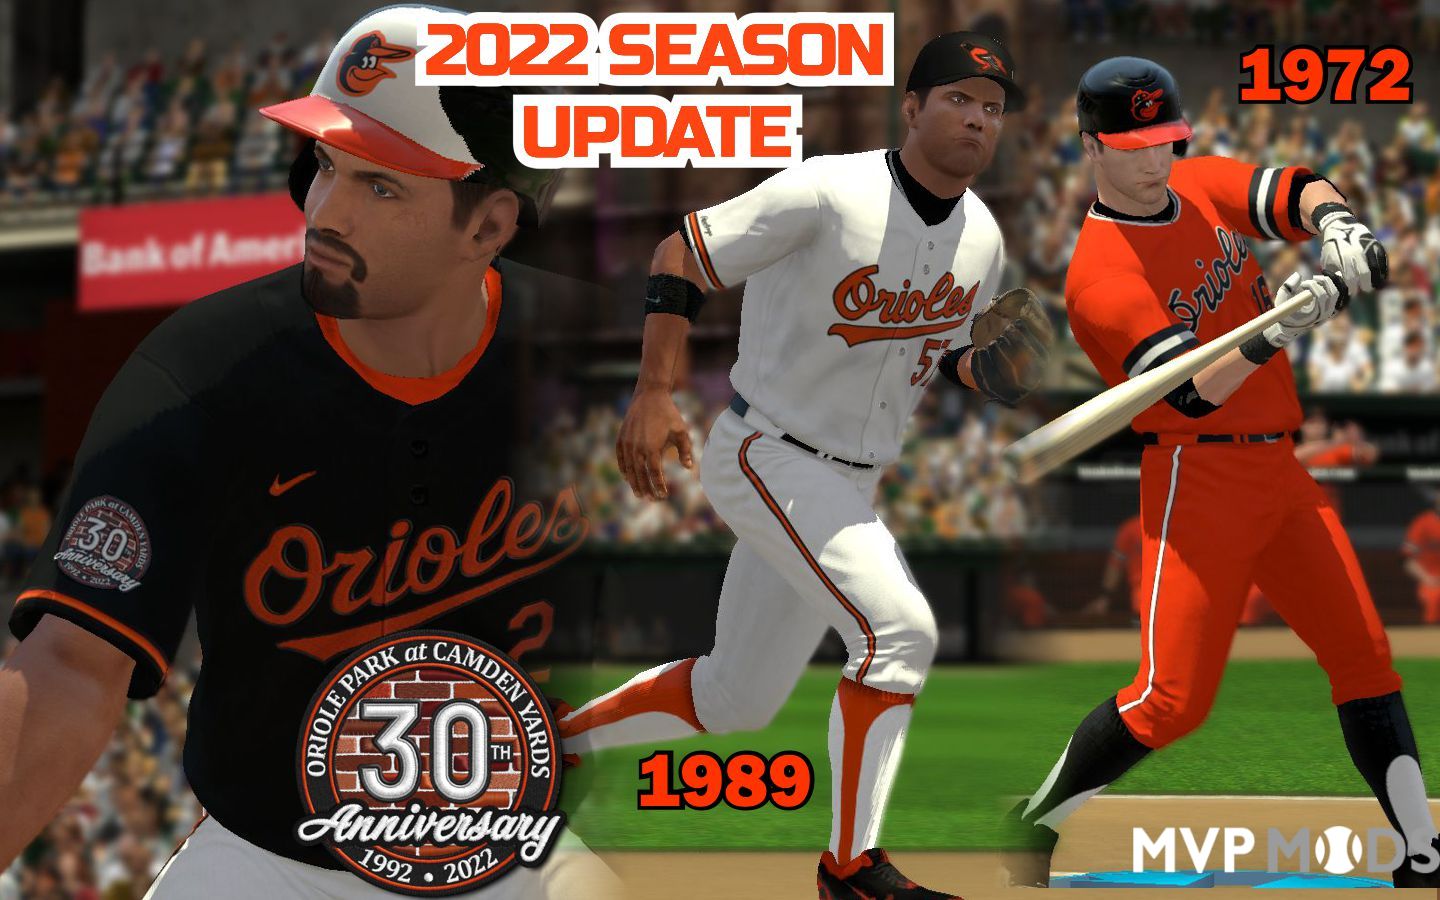 2020-2022 Baltimore Orioles Uniform Set - Uniforms - MVP Mods